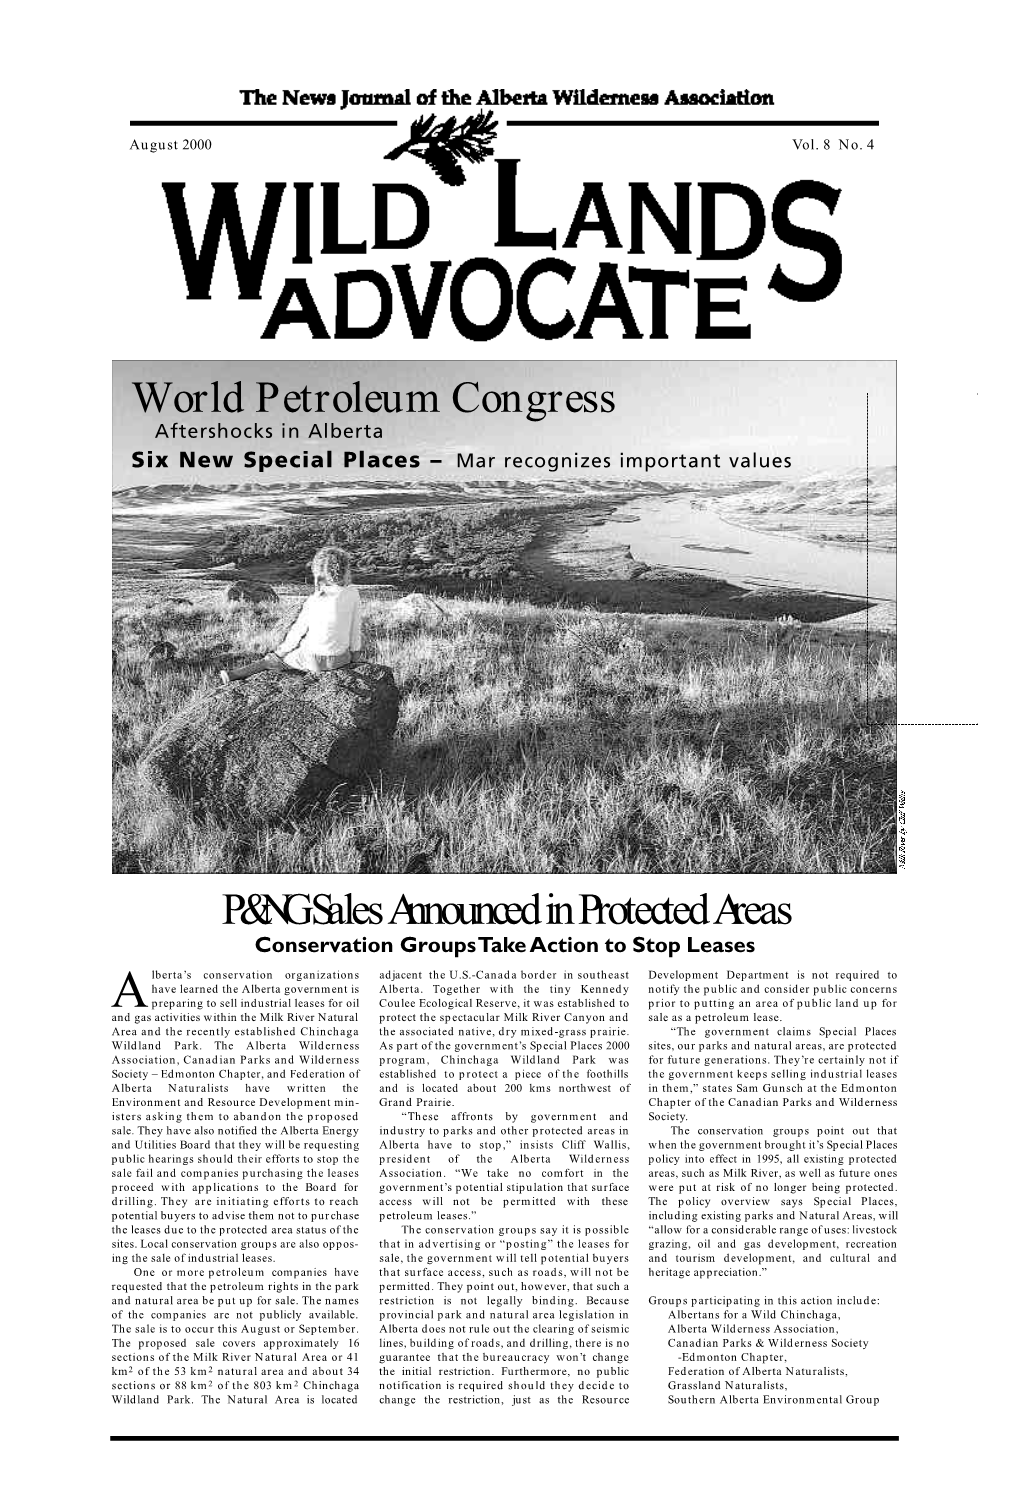 Wild Lands Advocate Vol.8 No.4